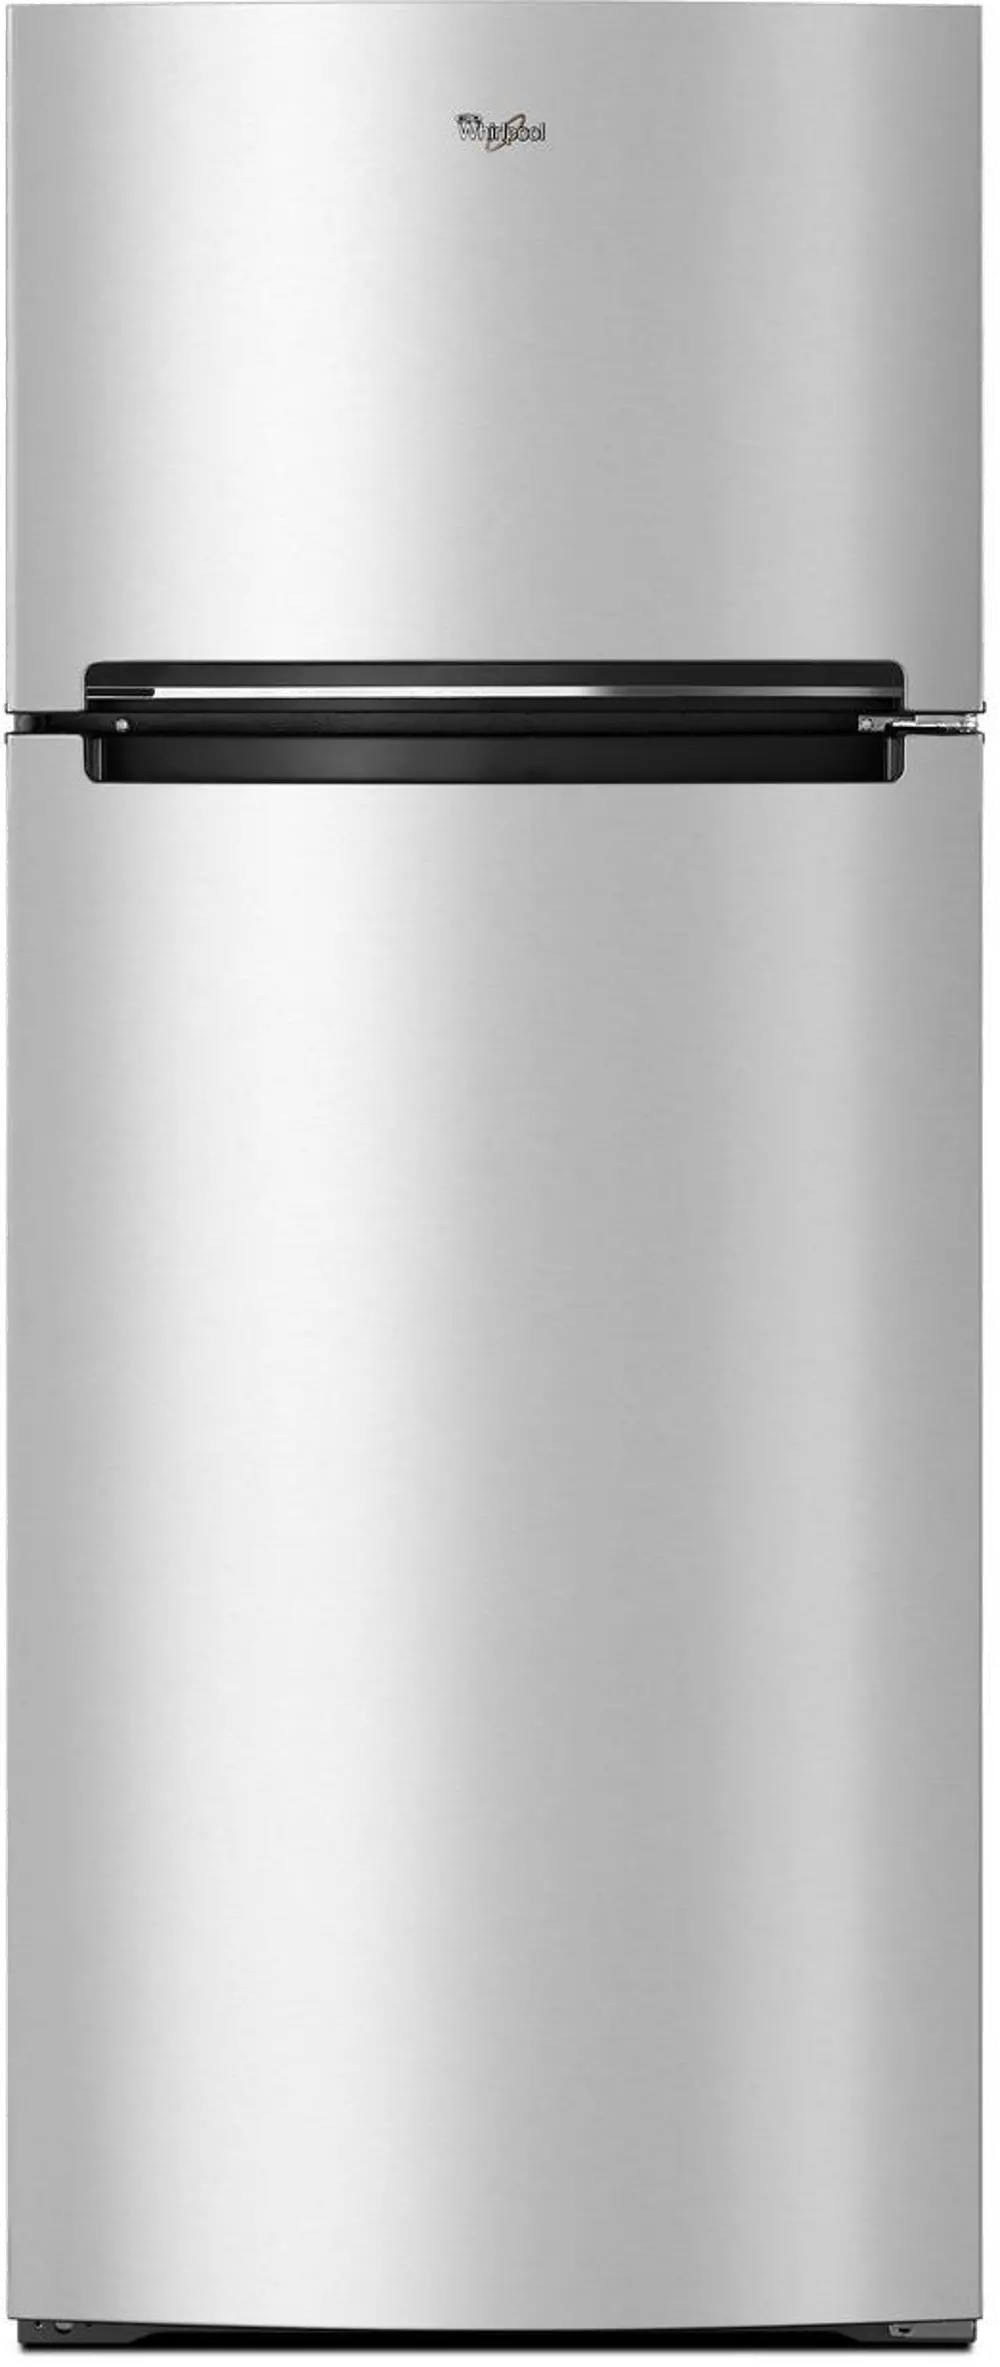 WRT518SZFM Whirlpool 18 cu ft Top Freezer Refrigerator - 28 W Stainless Steel-1